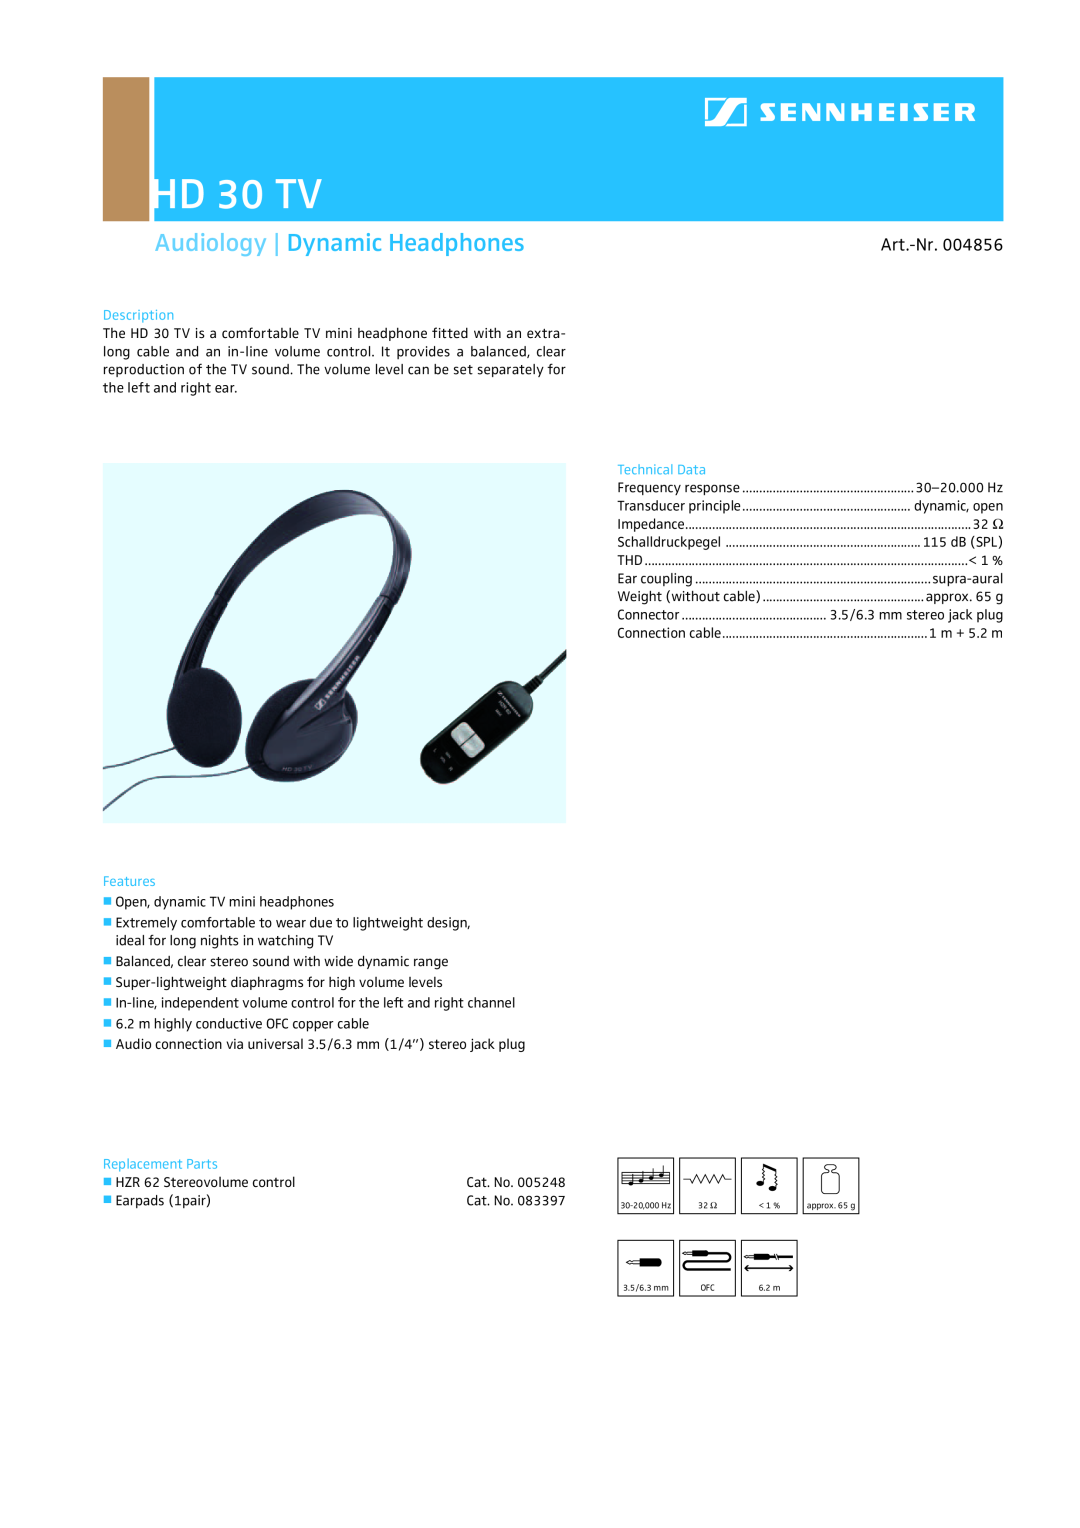 Sennheiser HD 30 TV manual Audiology Dynamic Headphones, Art.-Nr.004856, Description, Technical Data, Features 